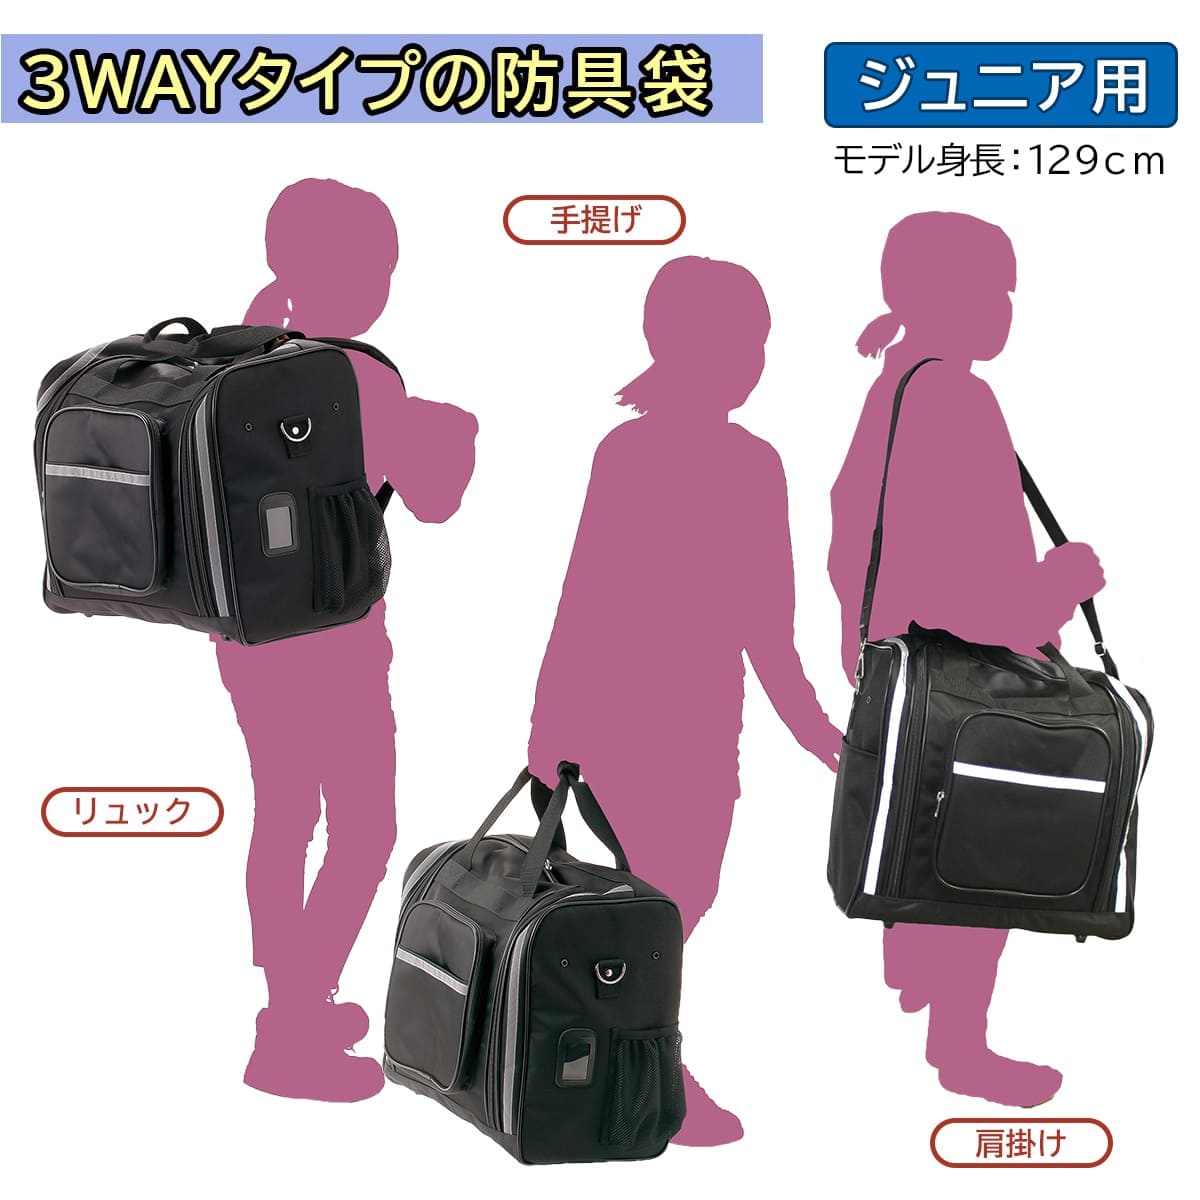 防具袋 SN角形リュック 防具バッグ 少年用 – 西日本武道具